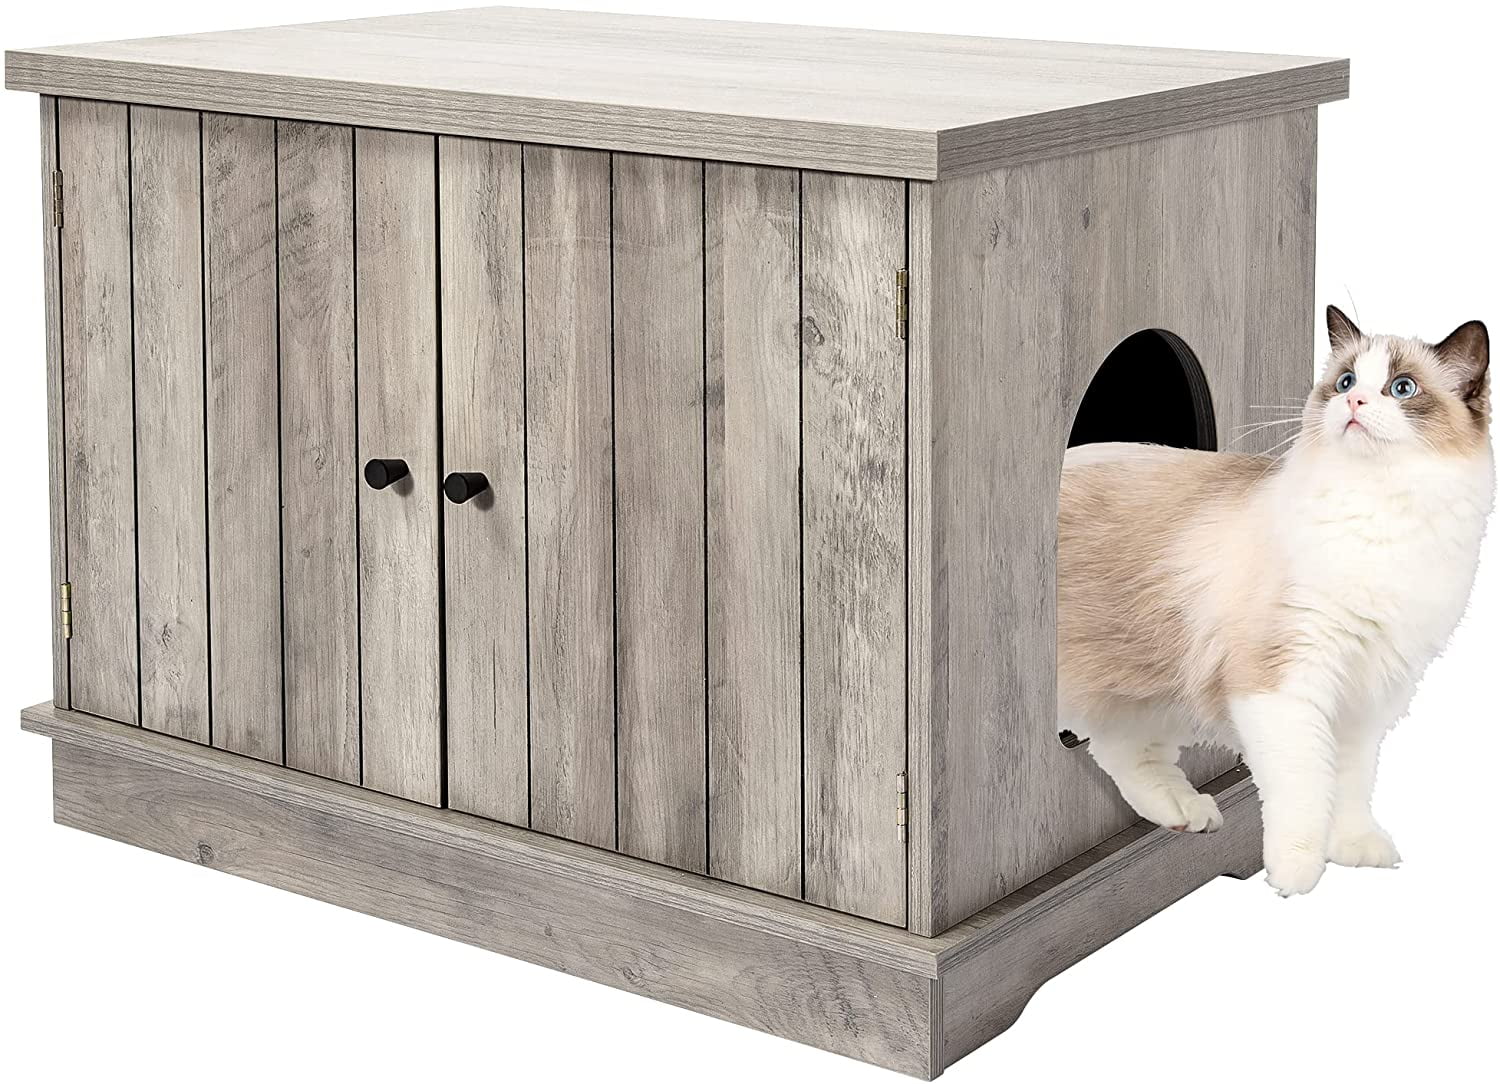 Cat Litter Box Wooden Cabinet Enclosure Hidden Toilet House Furniture Cover Wood 